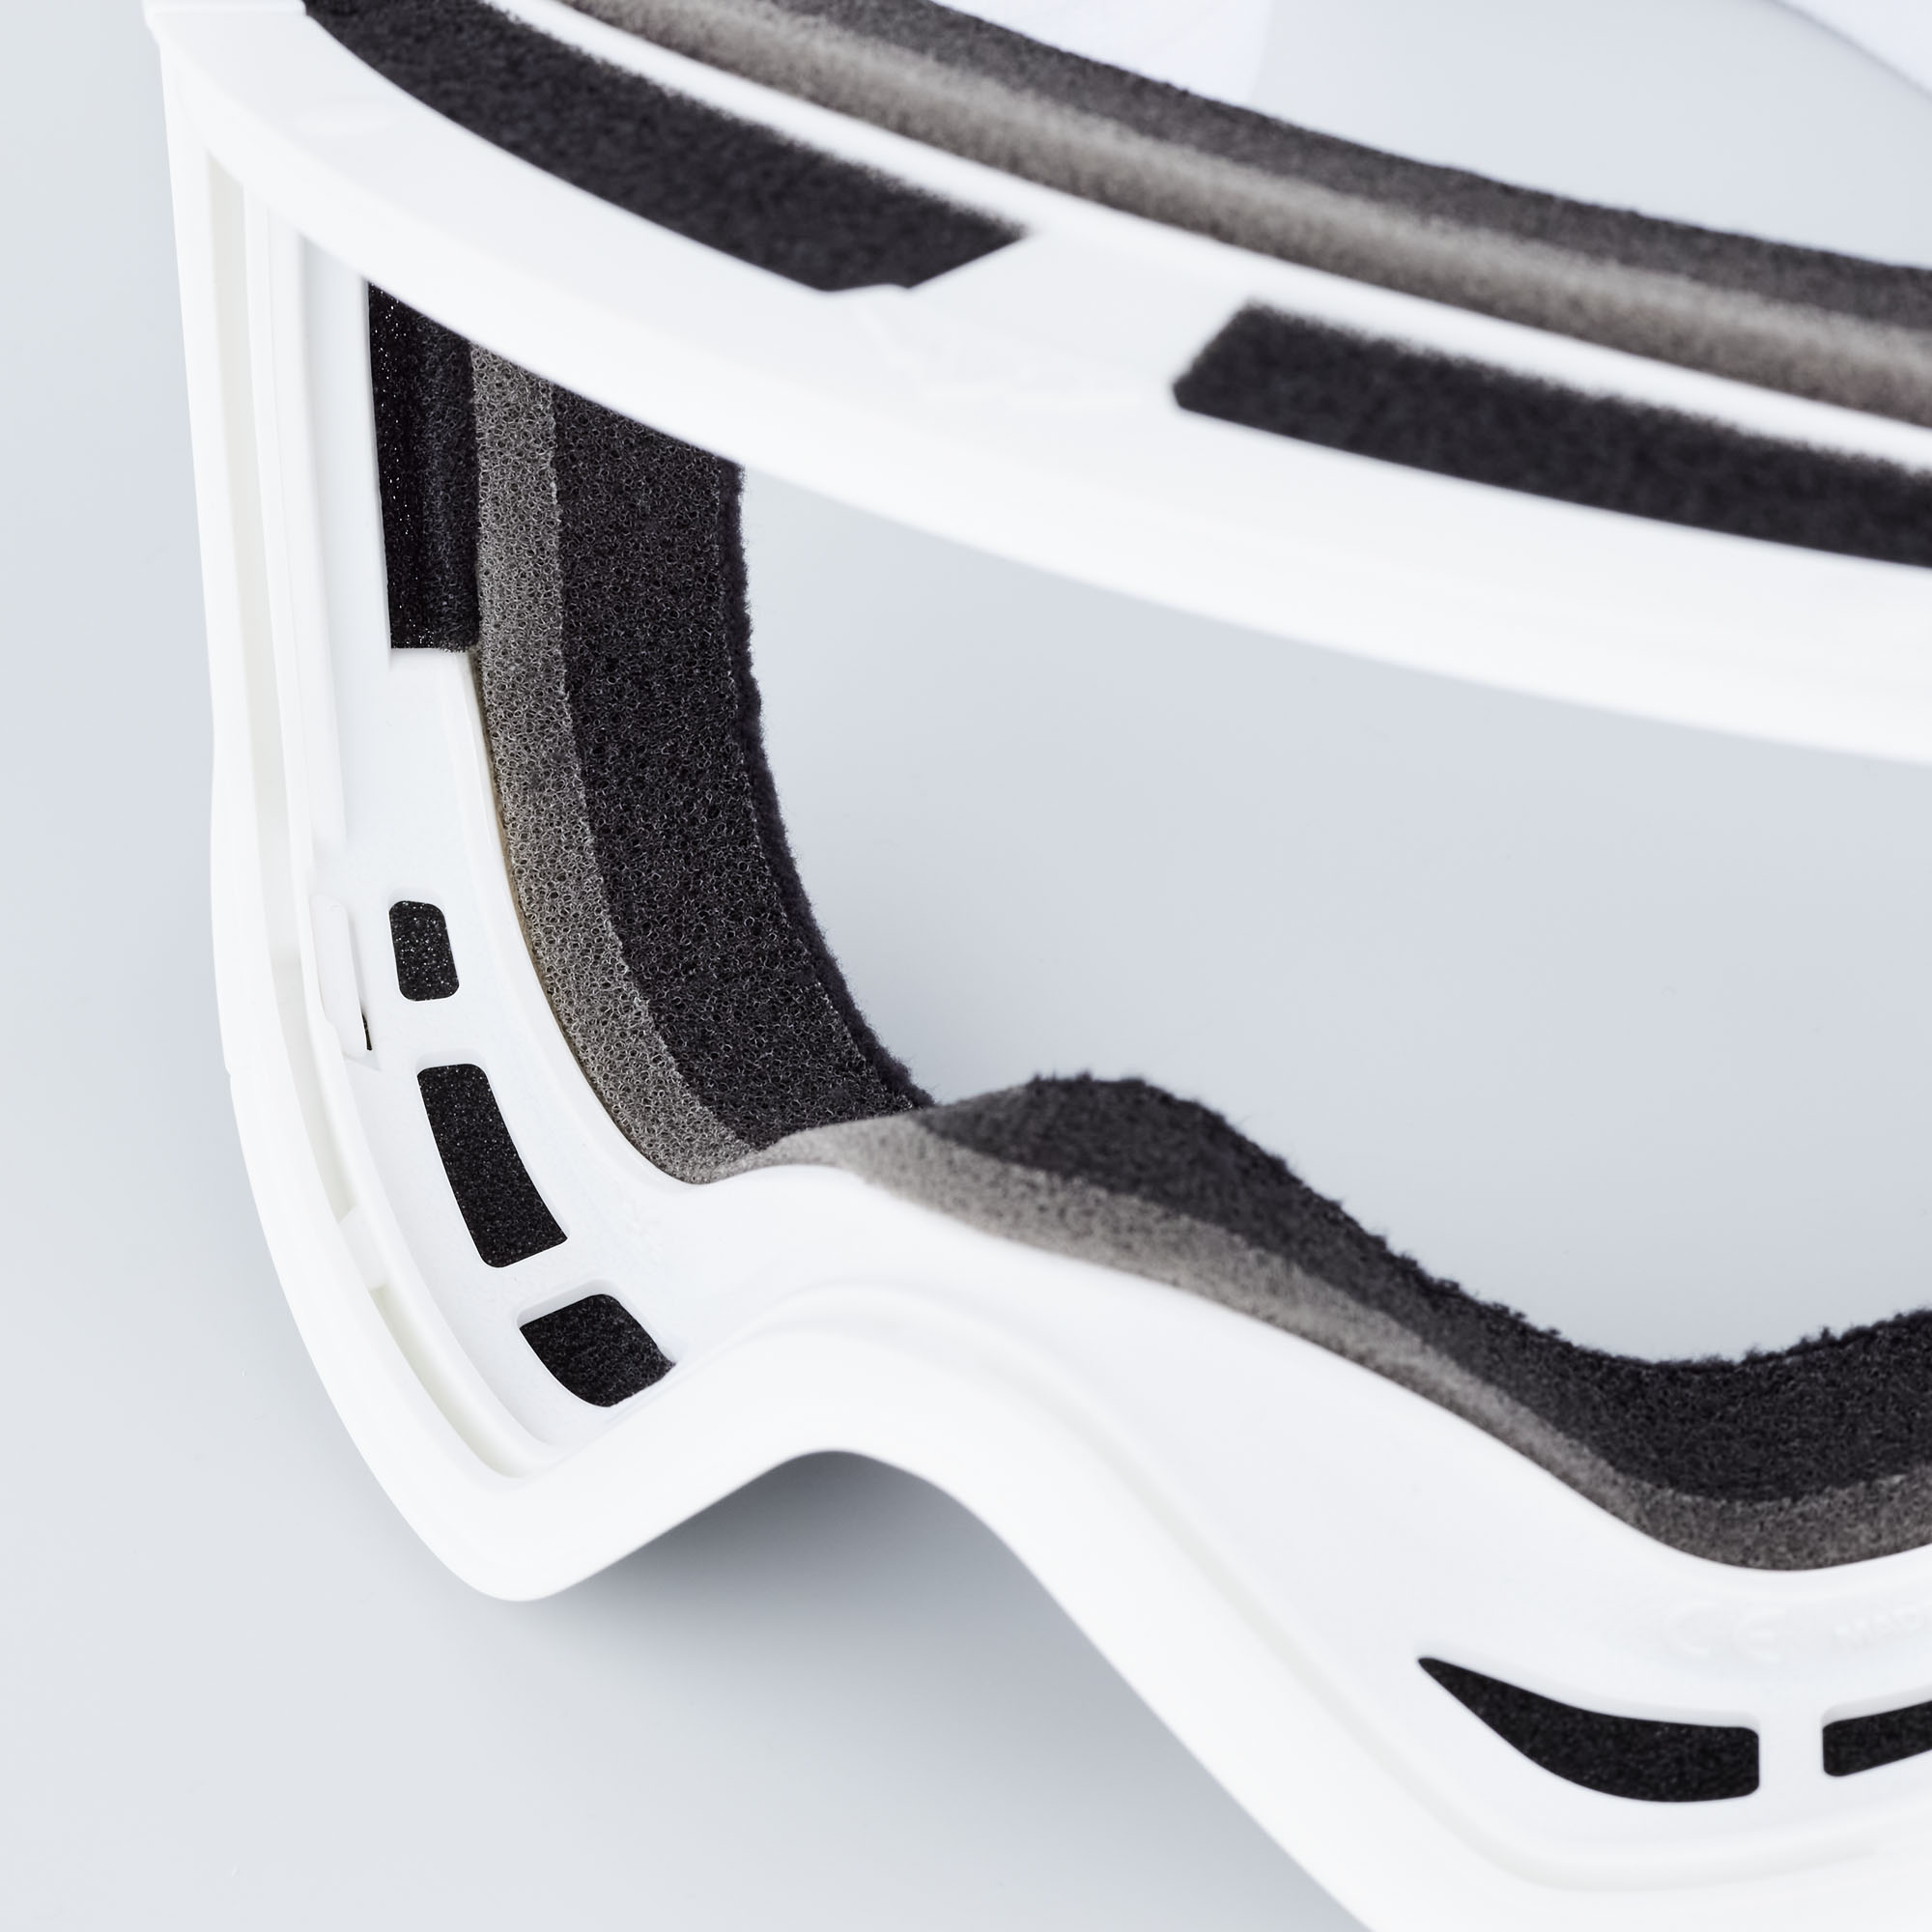 Dope Sight 2021 Masque de ski Homme White/Green Mirror